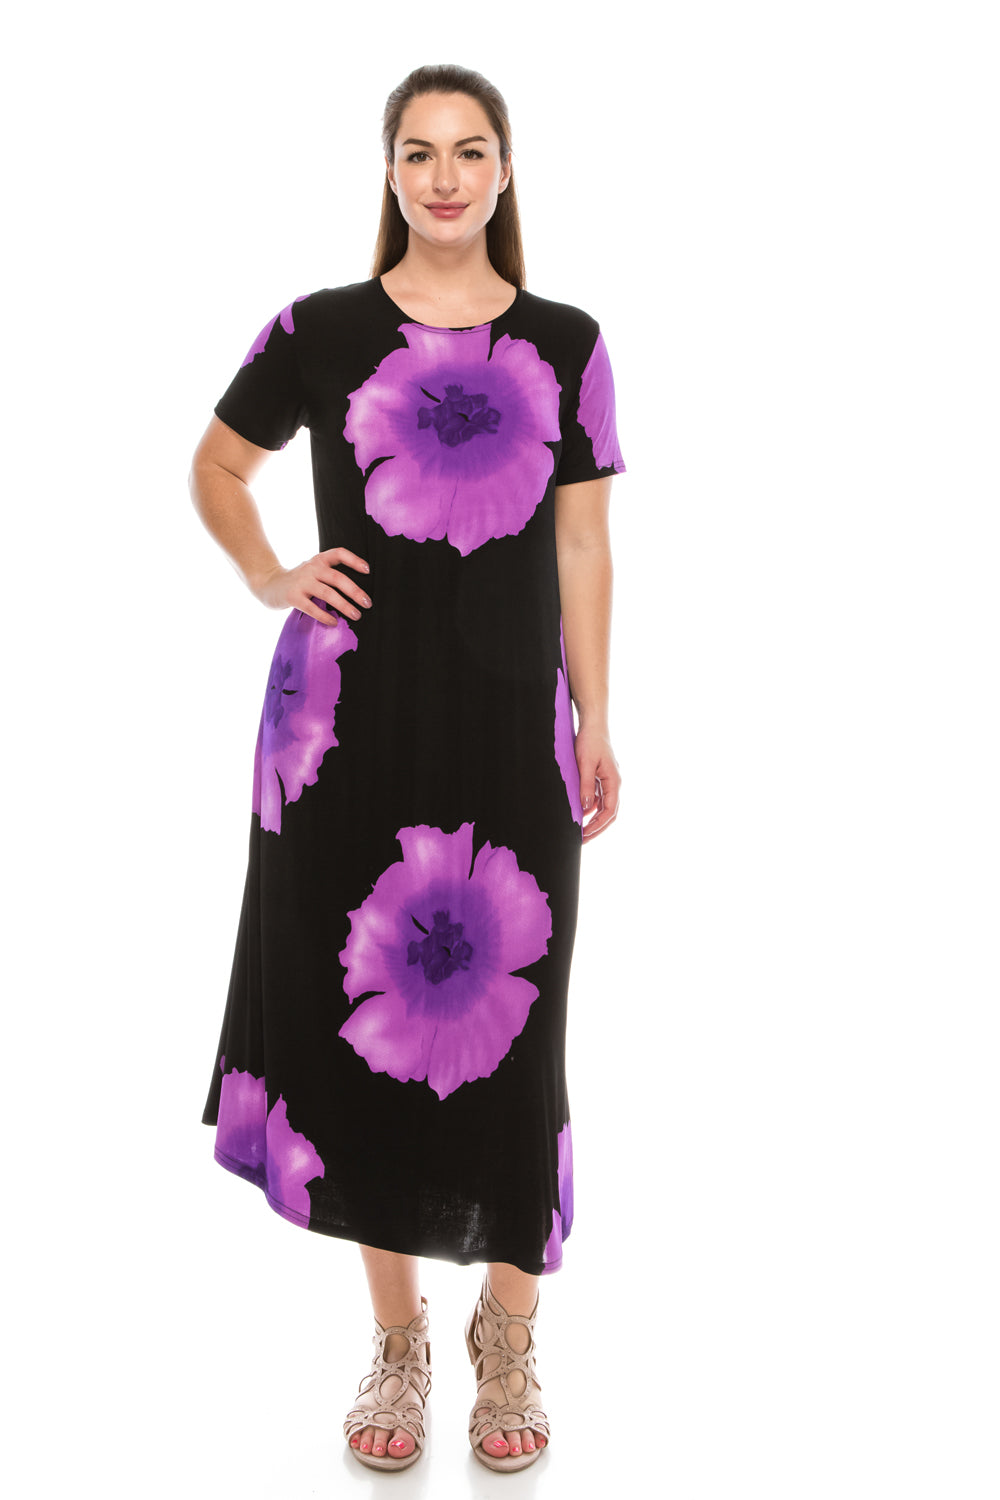 Jostar Women's Stretchy Long Dress Short Sleeve Print, 702BN-SP-W113 - Jostar Online